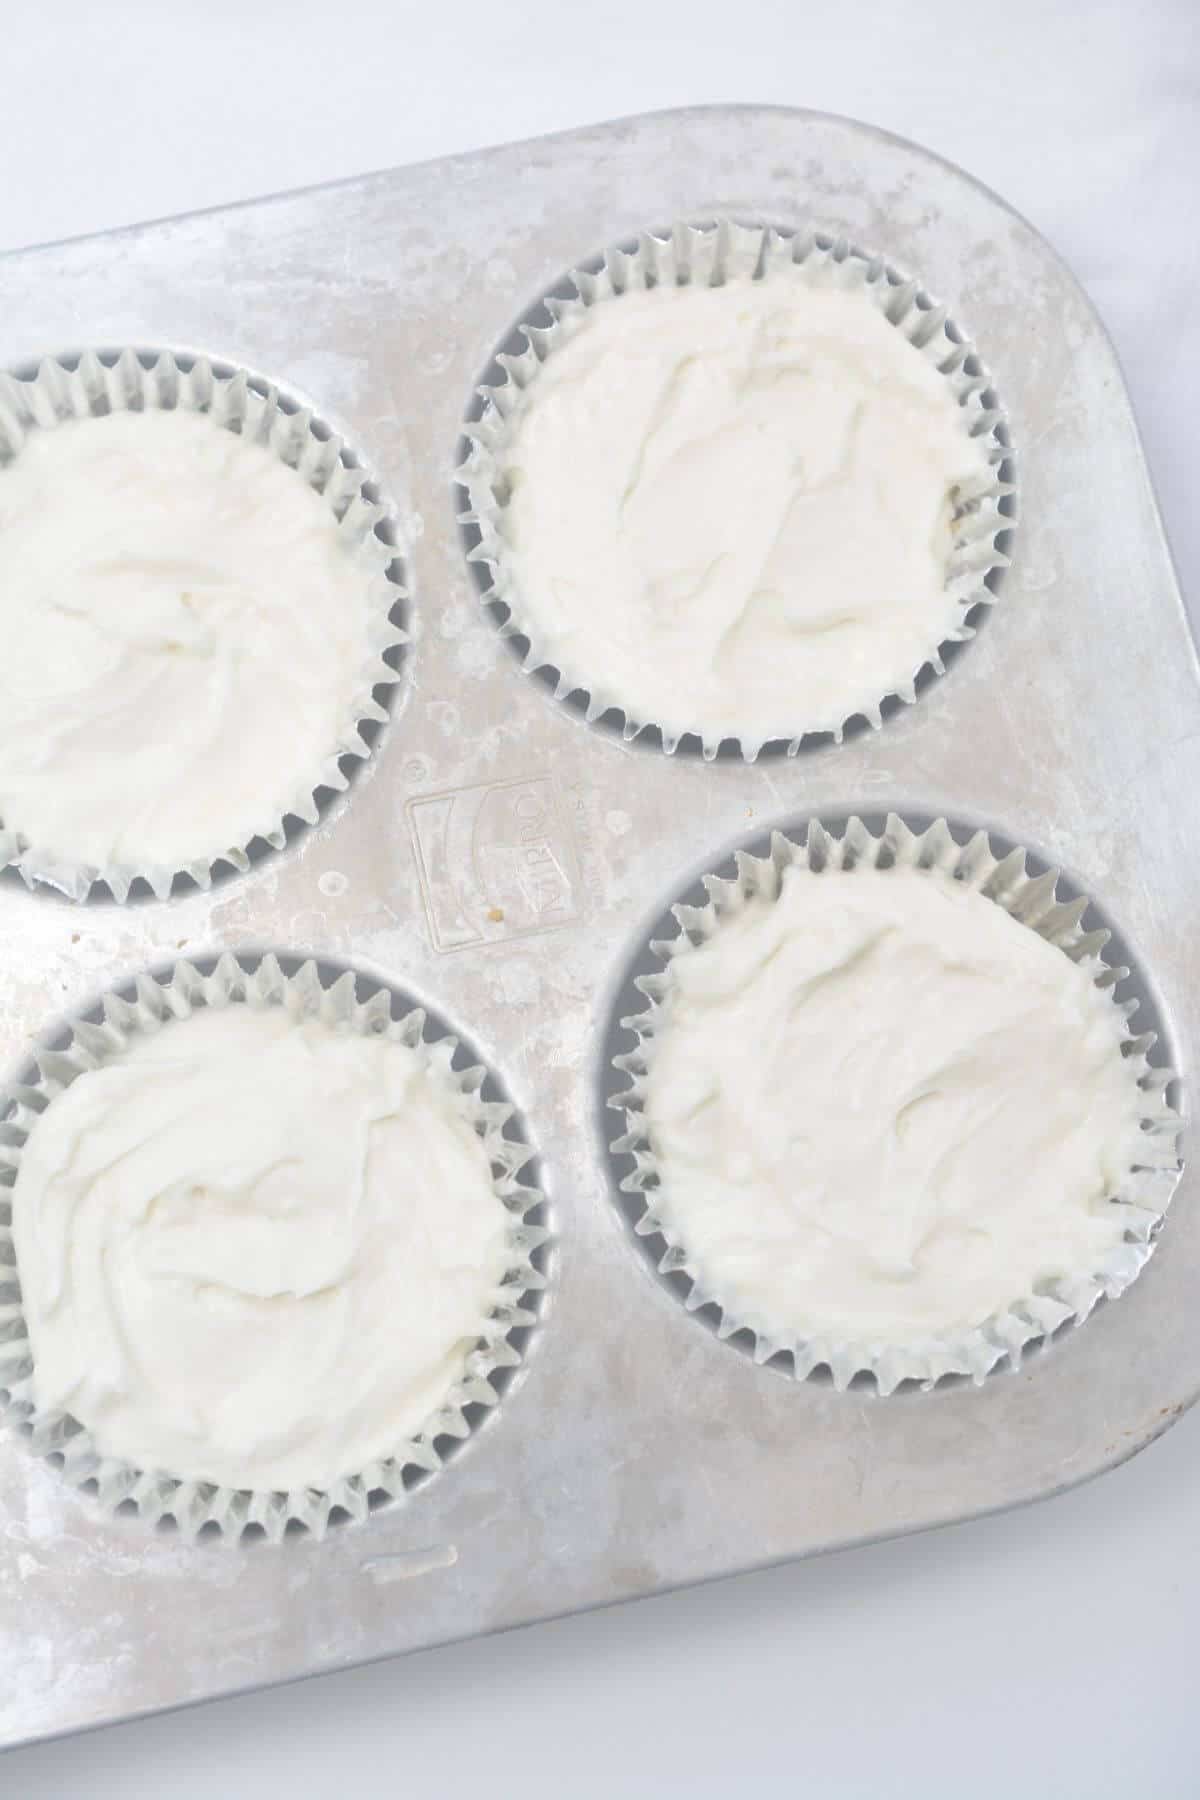 Vegan cheesecake filling spread over crust in muffin pan.